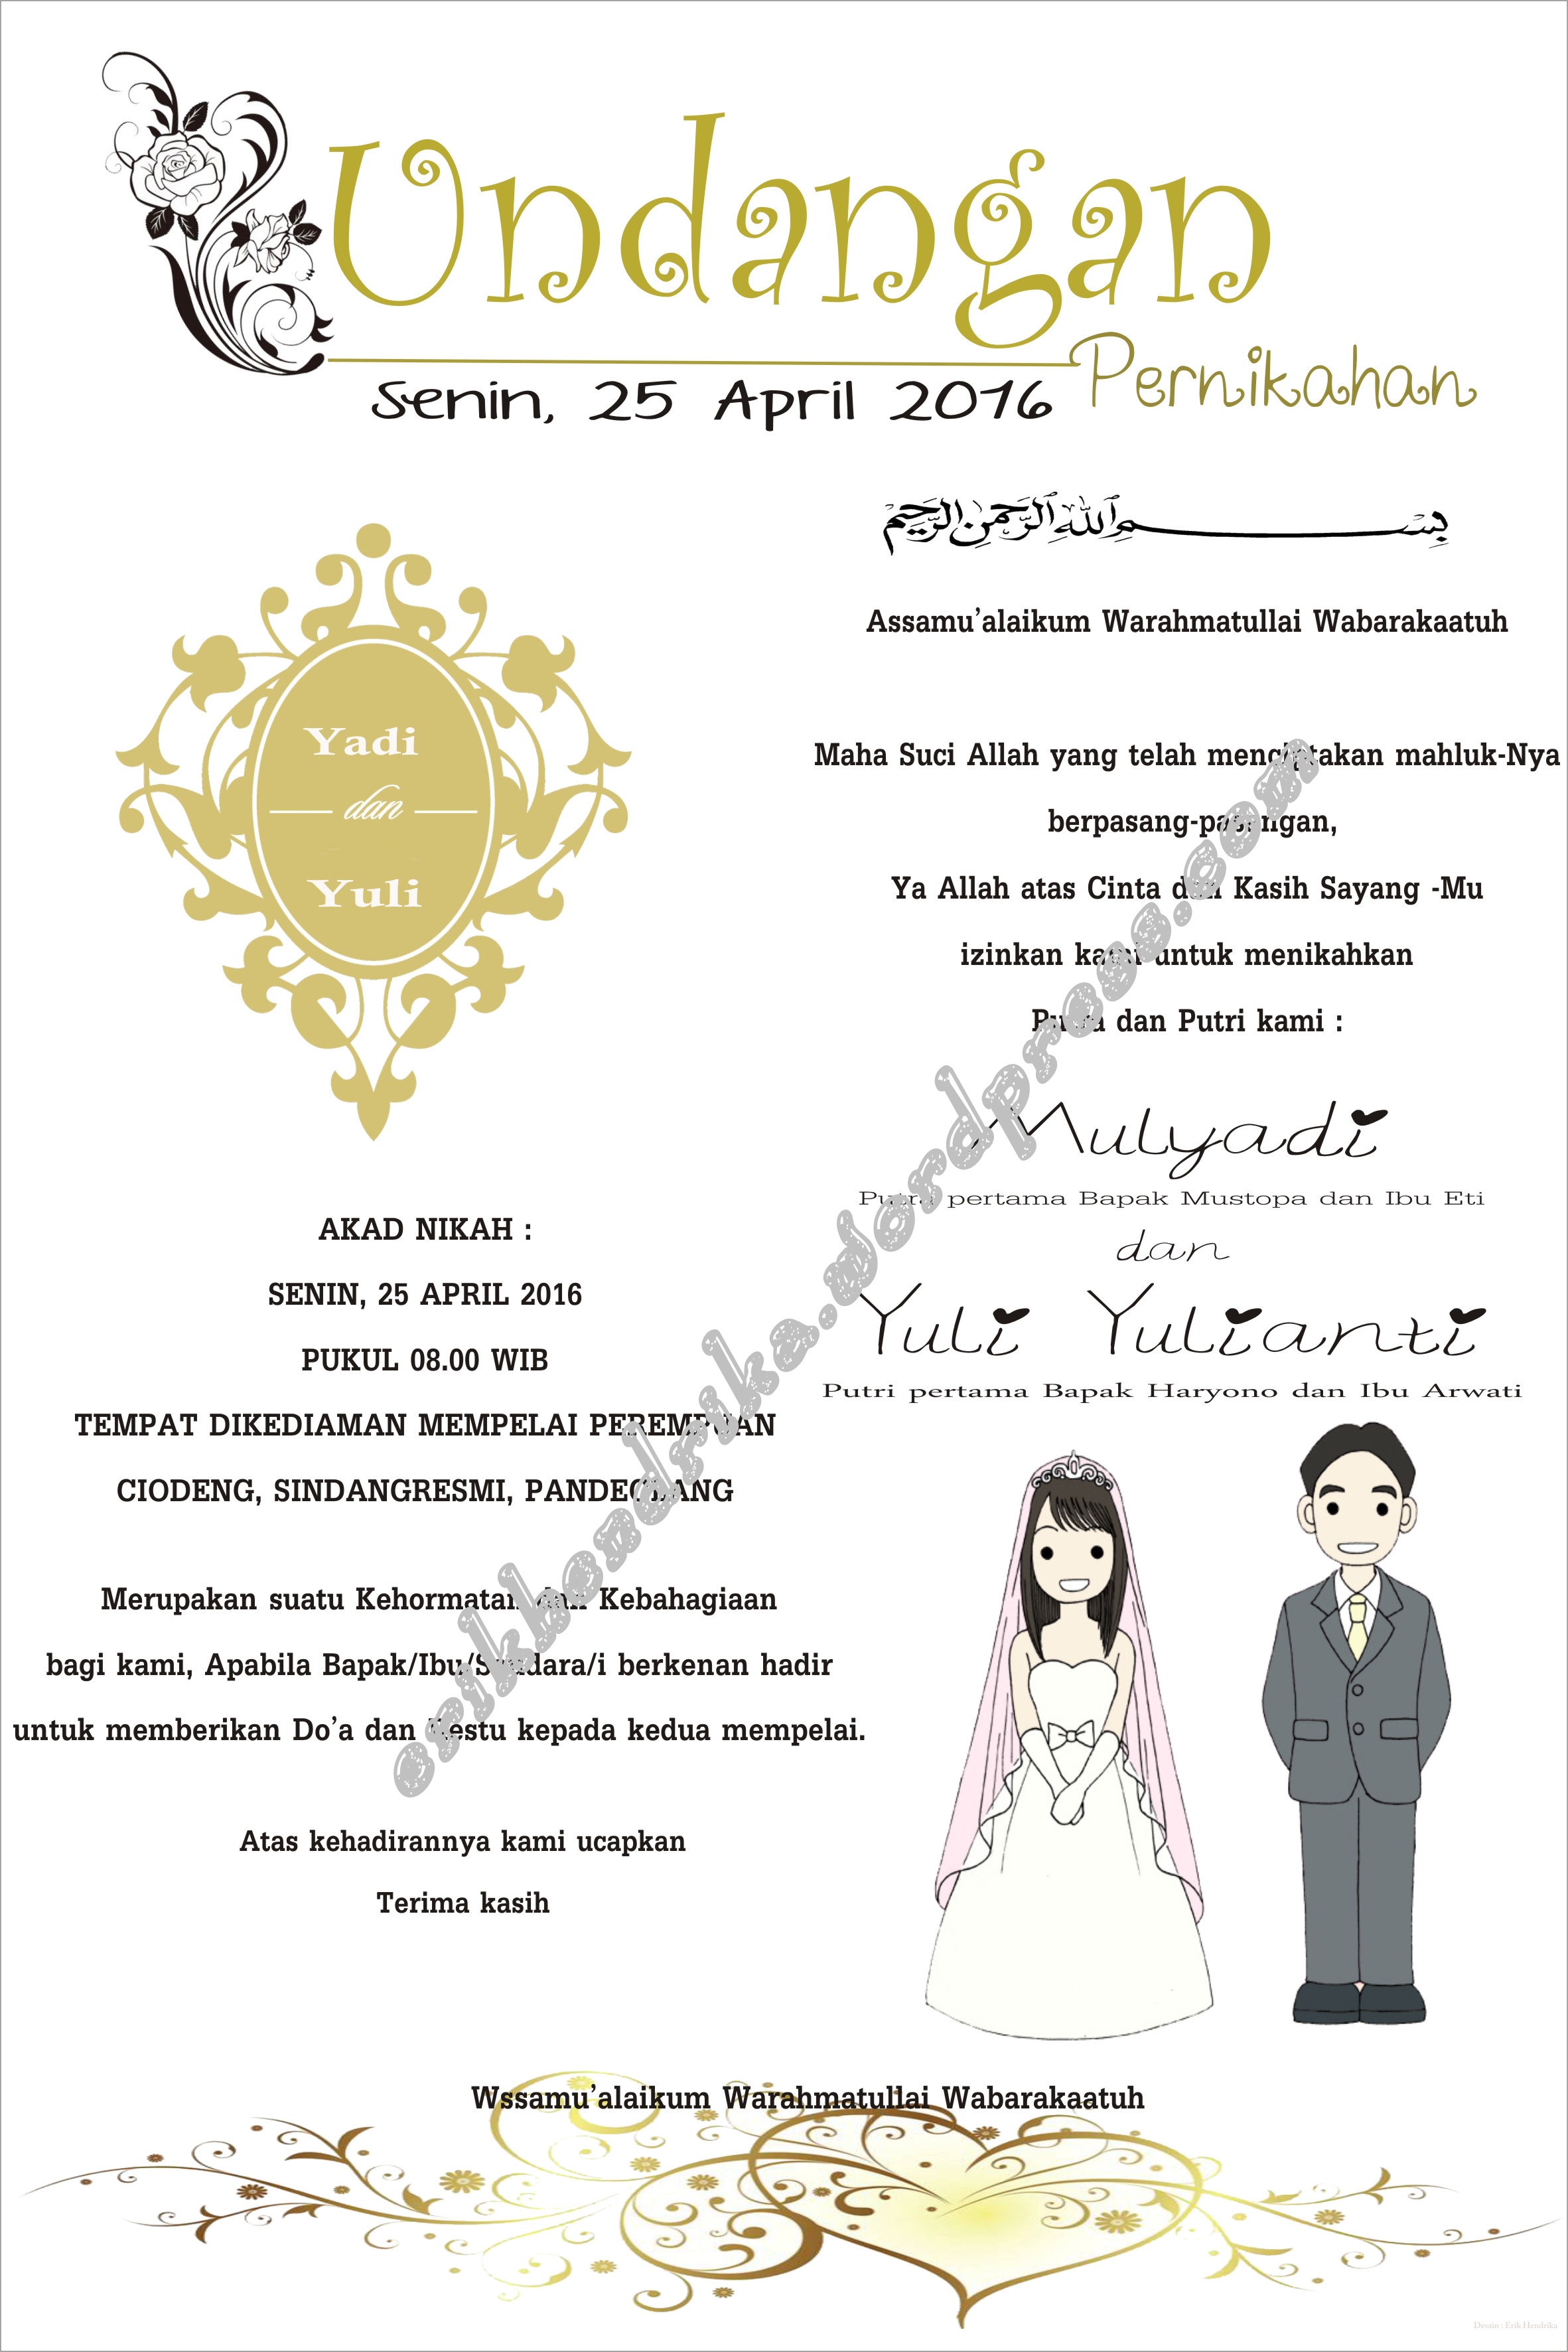 surat undangan pernikahan